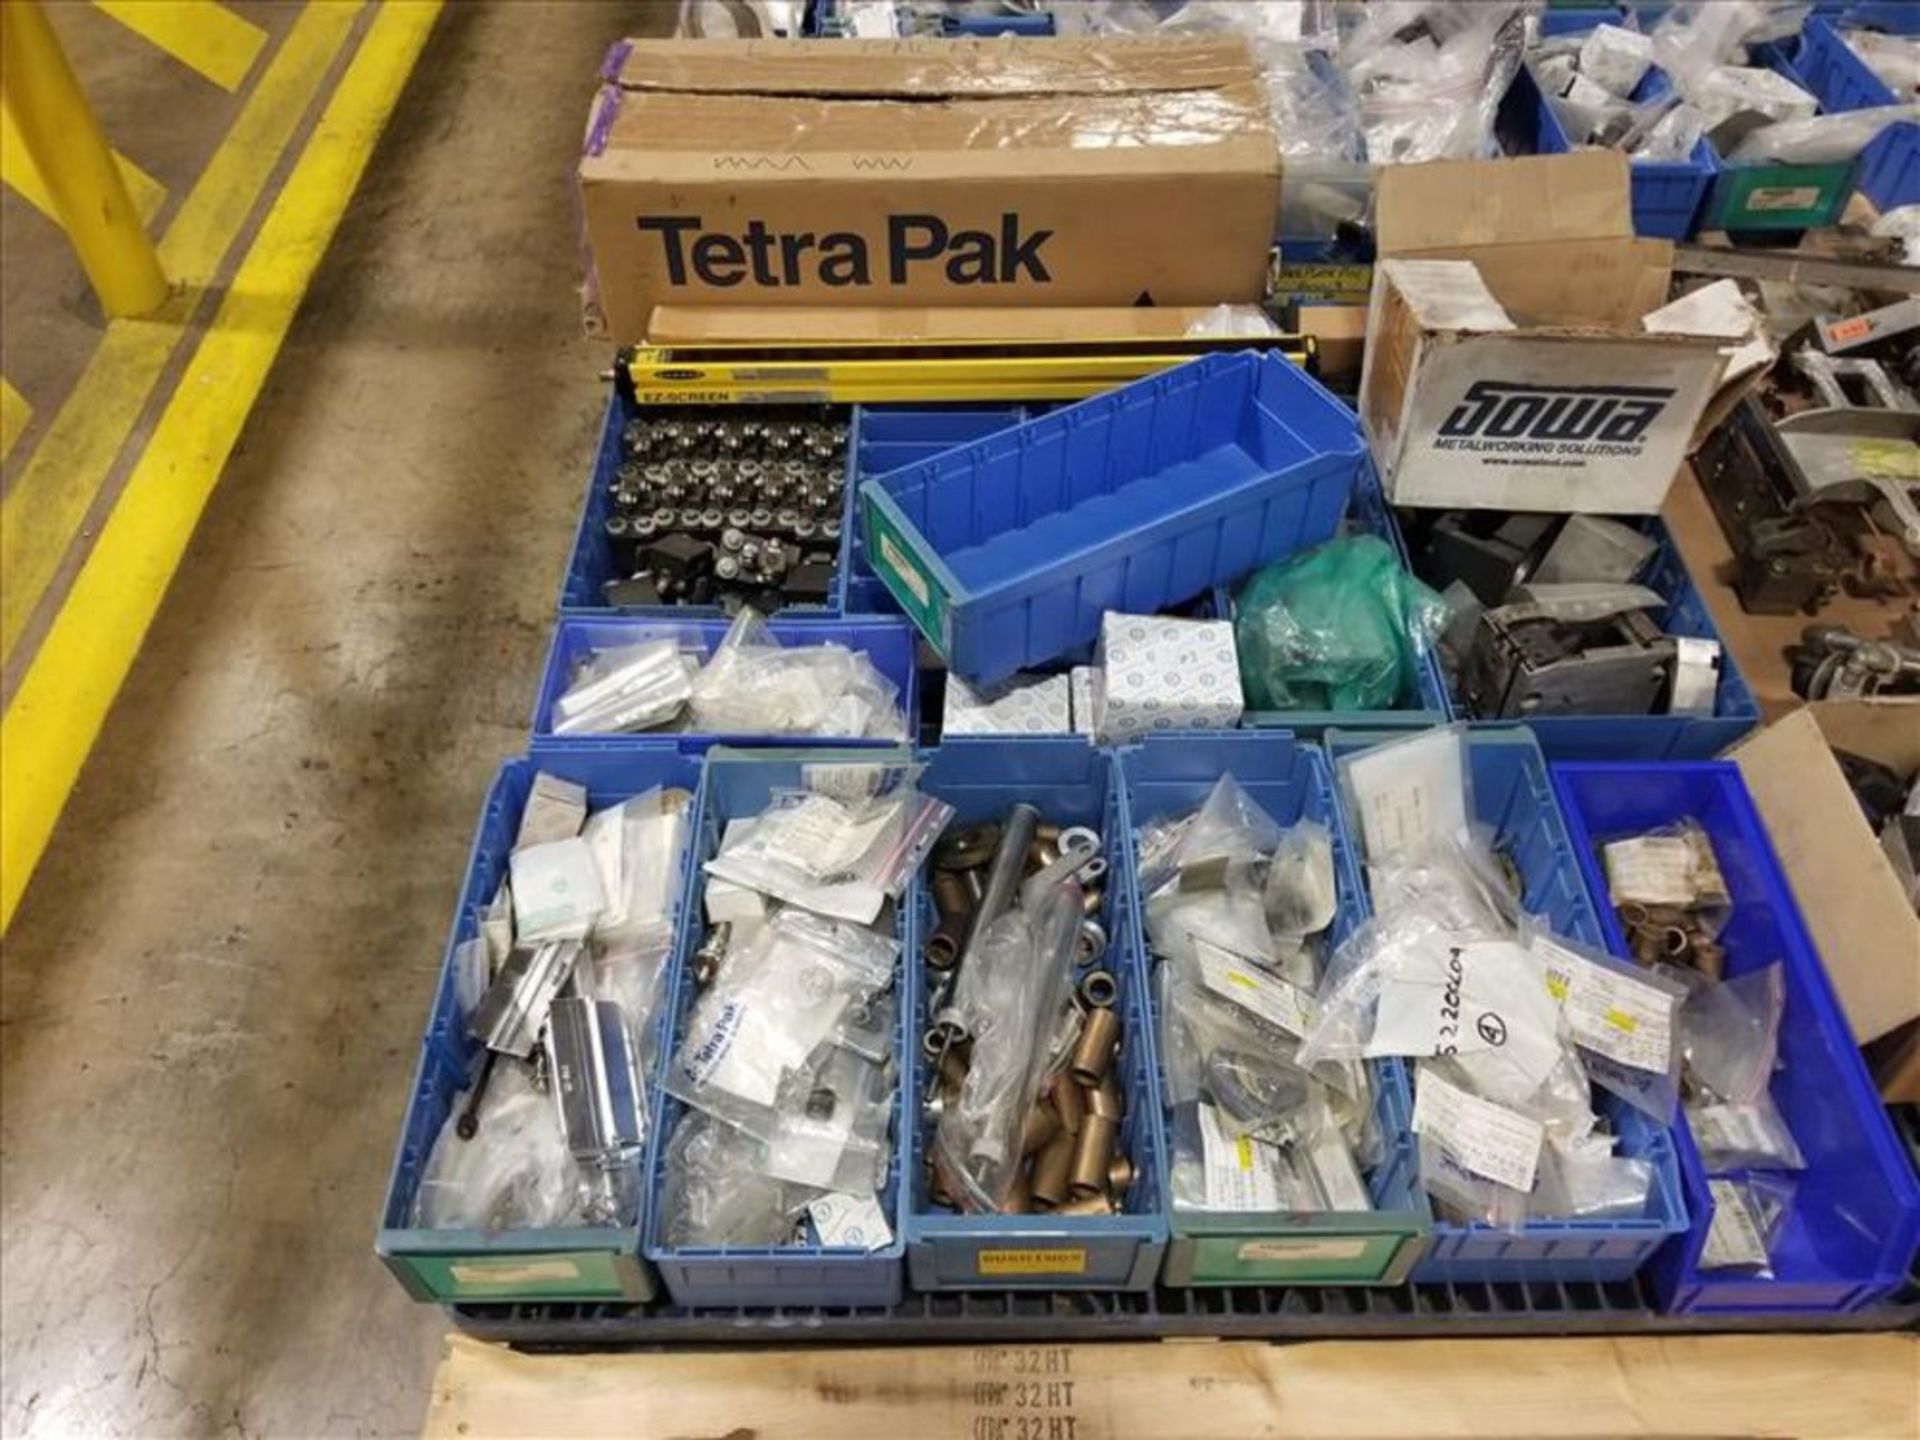 Lot Tetra Pak Assortment Change Parts, Shafts, Electrical Belts, Motor, Cylinders, Pump, (11) - Image 5 of 13